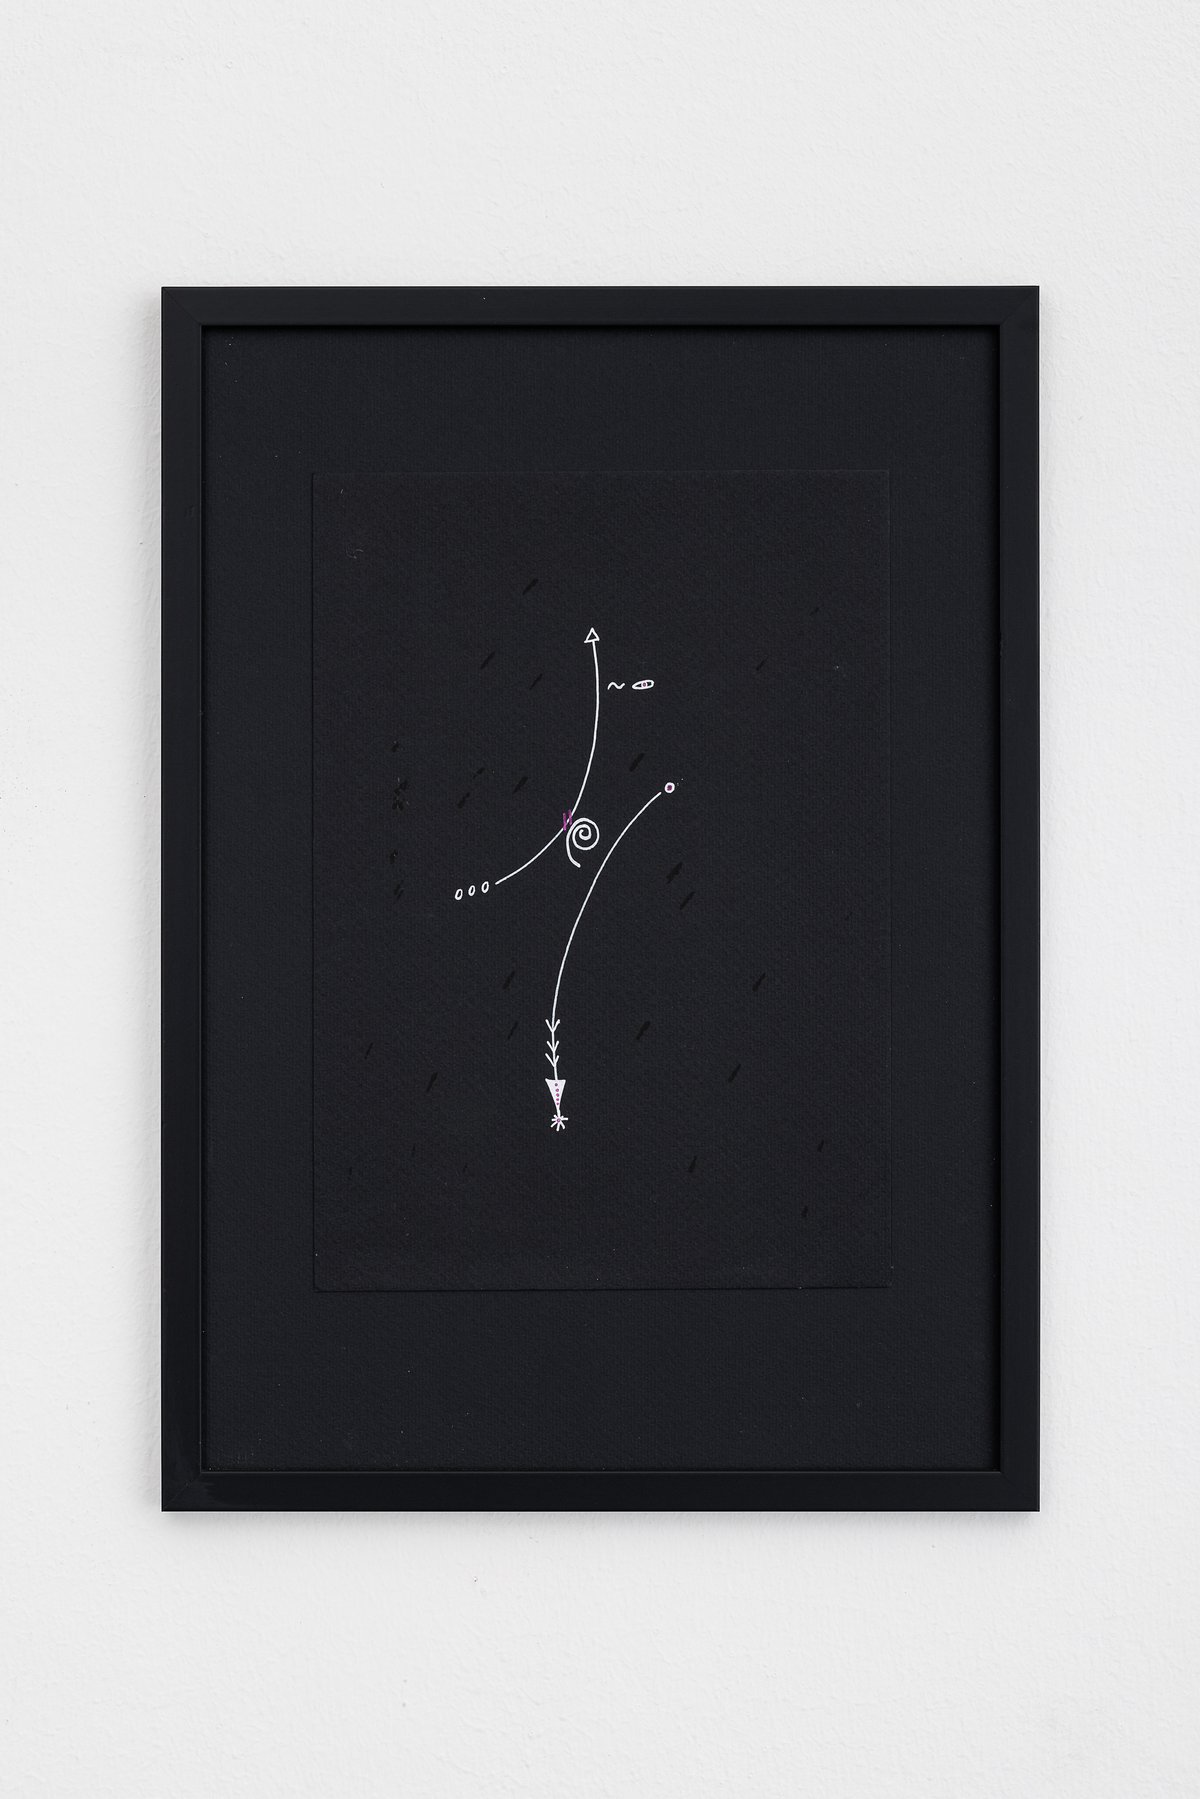 Melika Ngombe Kolongo, Crossroads #03, 2022, Acrylic pen on paper, 42 x 29,7 cm (framed)